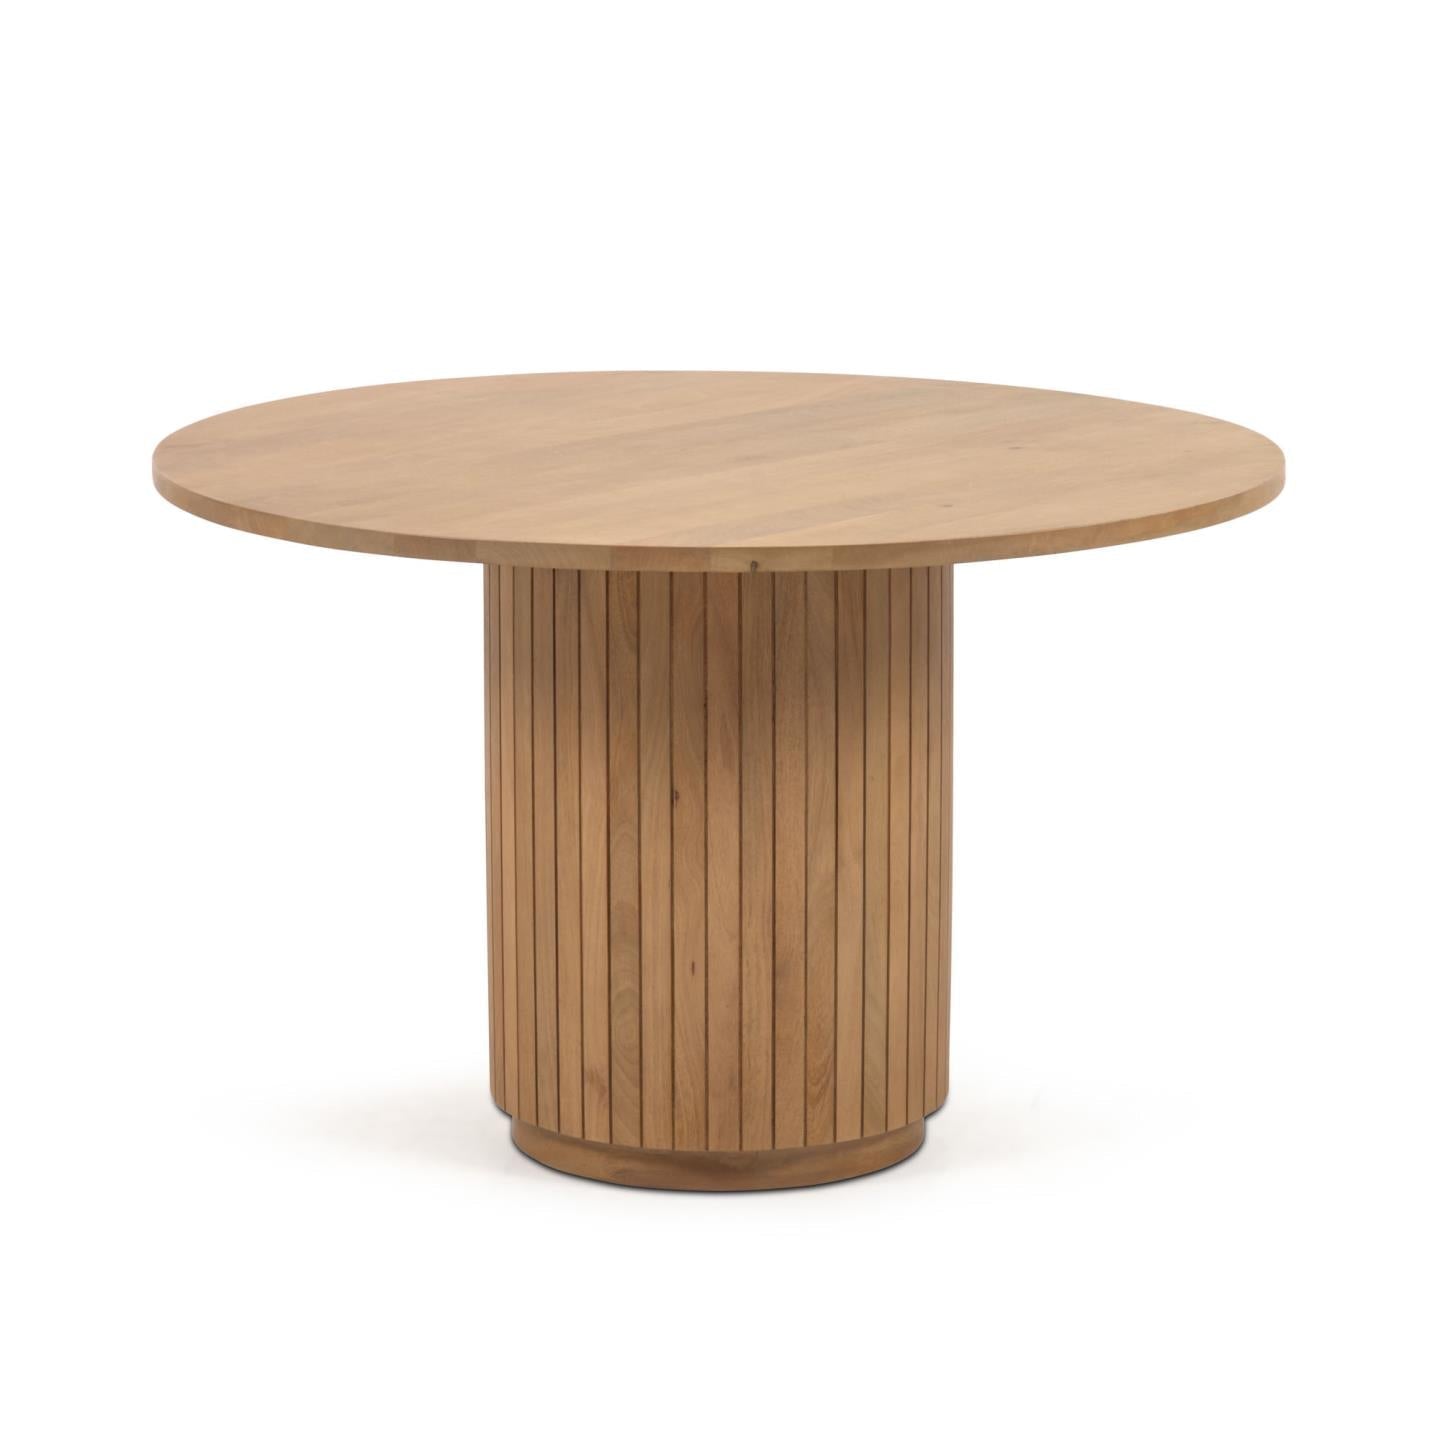 Kave Home Licia runder Tisch aus massivem Mangoholz mit natürlichem Finish Ø 120 cm Natur-CC6002M46 #CC6002M46